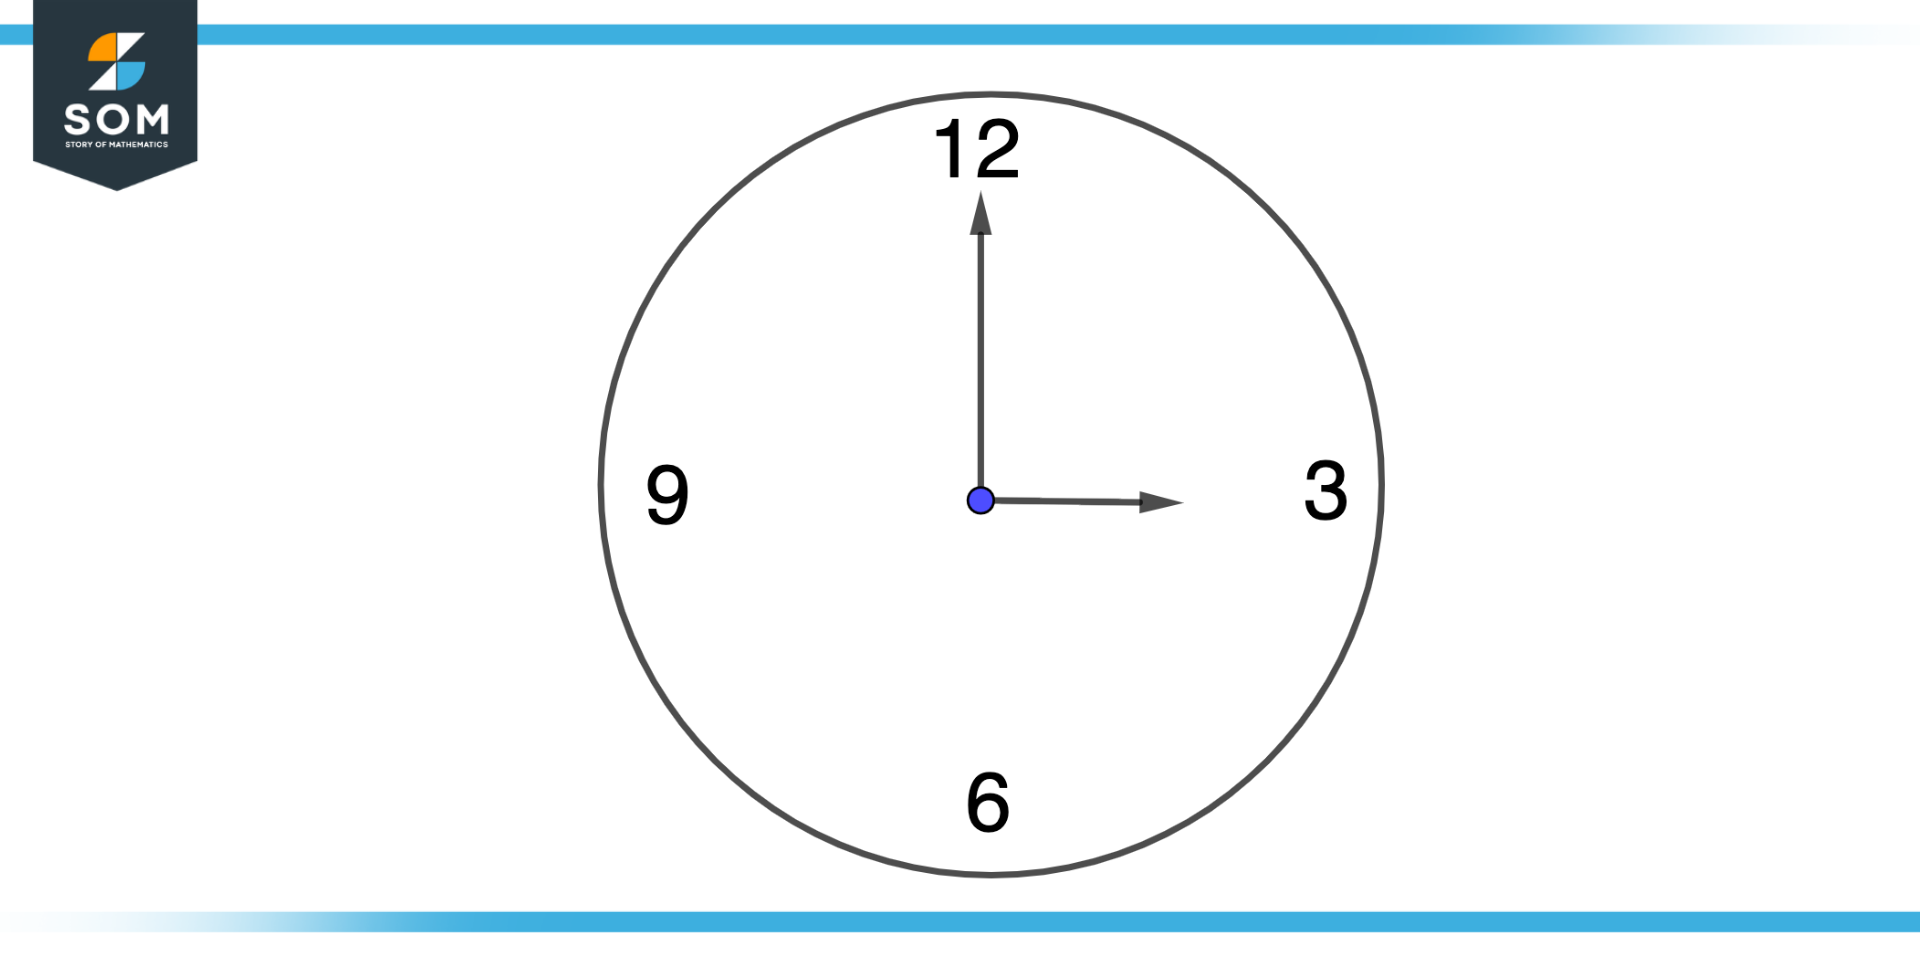 Visualizing Clock for realizing time